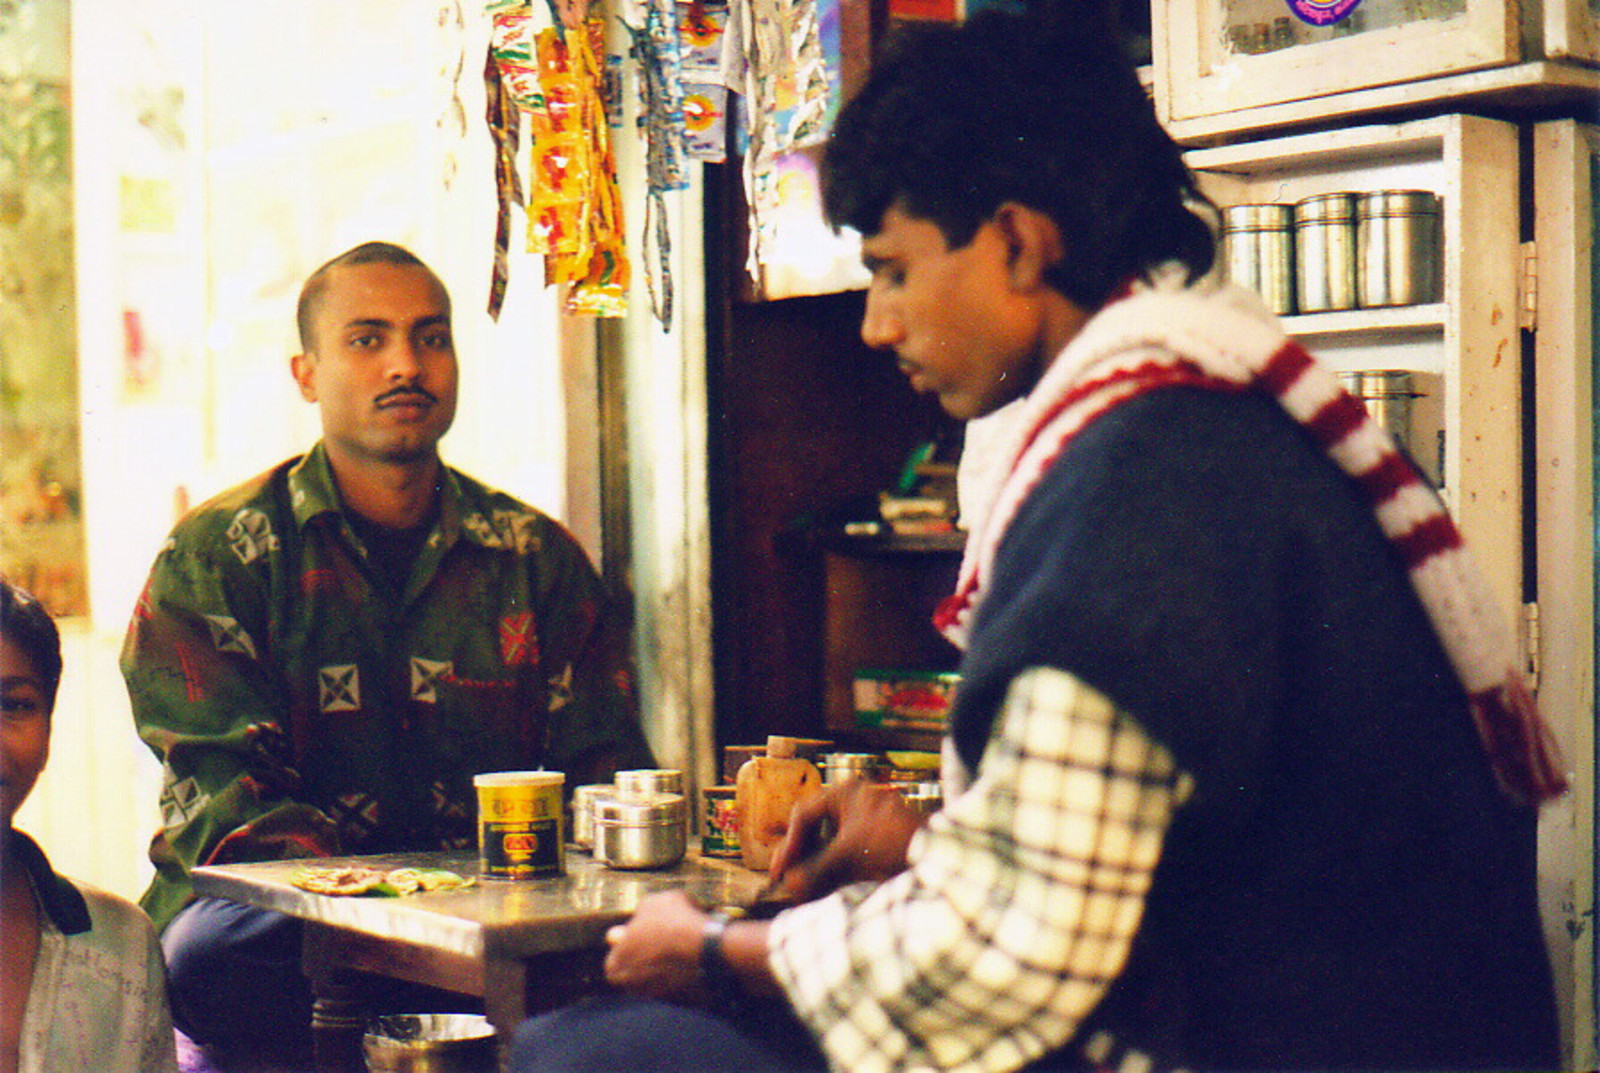 A man buying pan from the pan-wallah